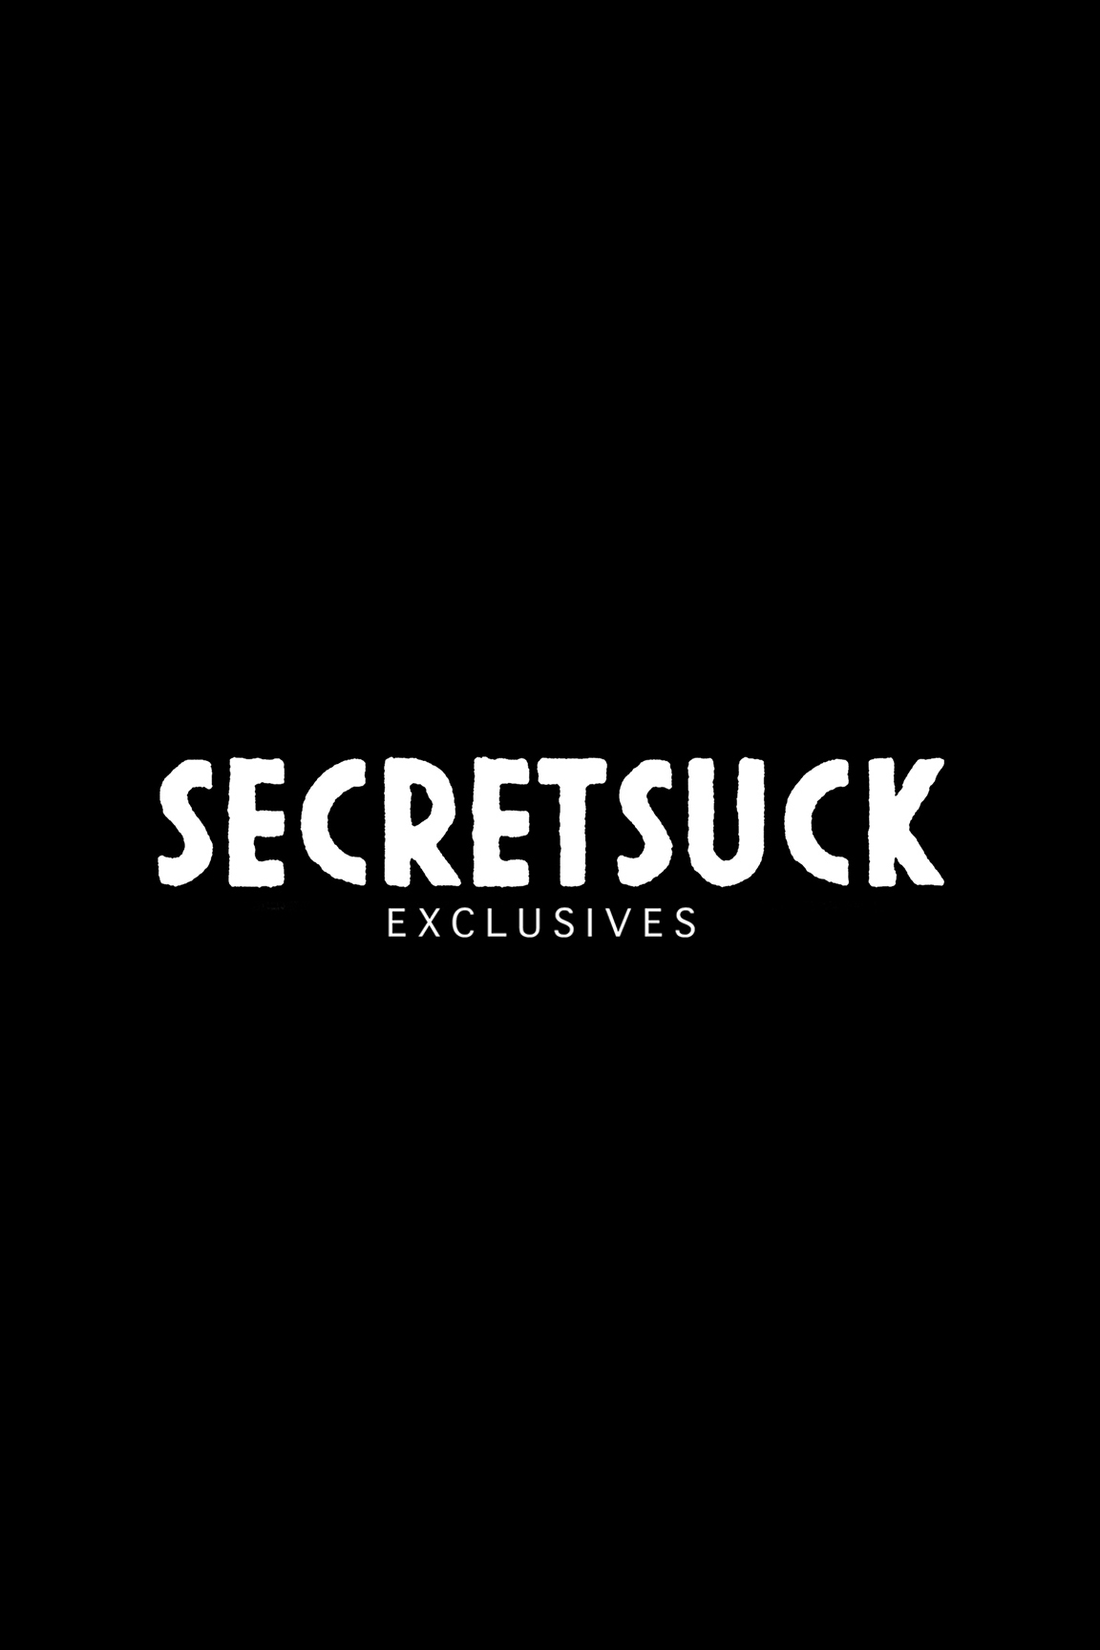 Secretsuck